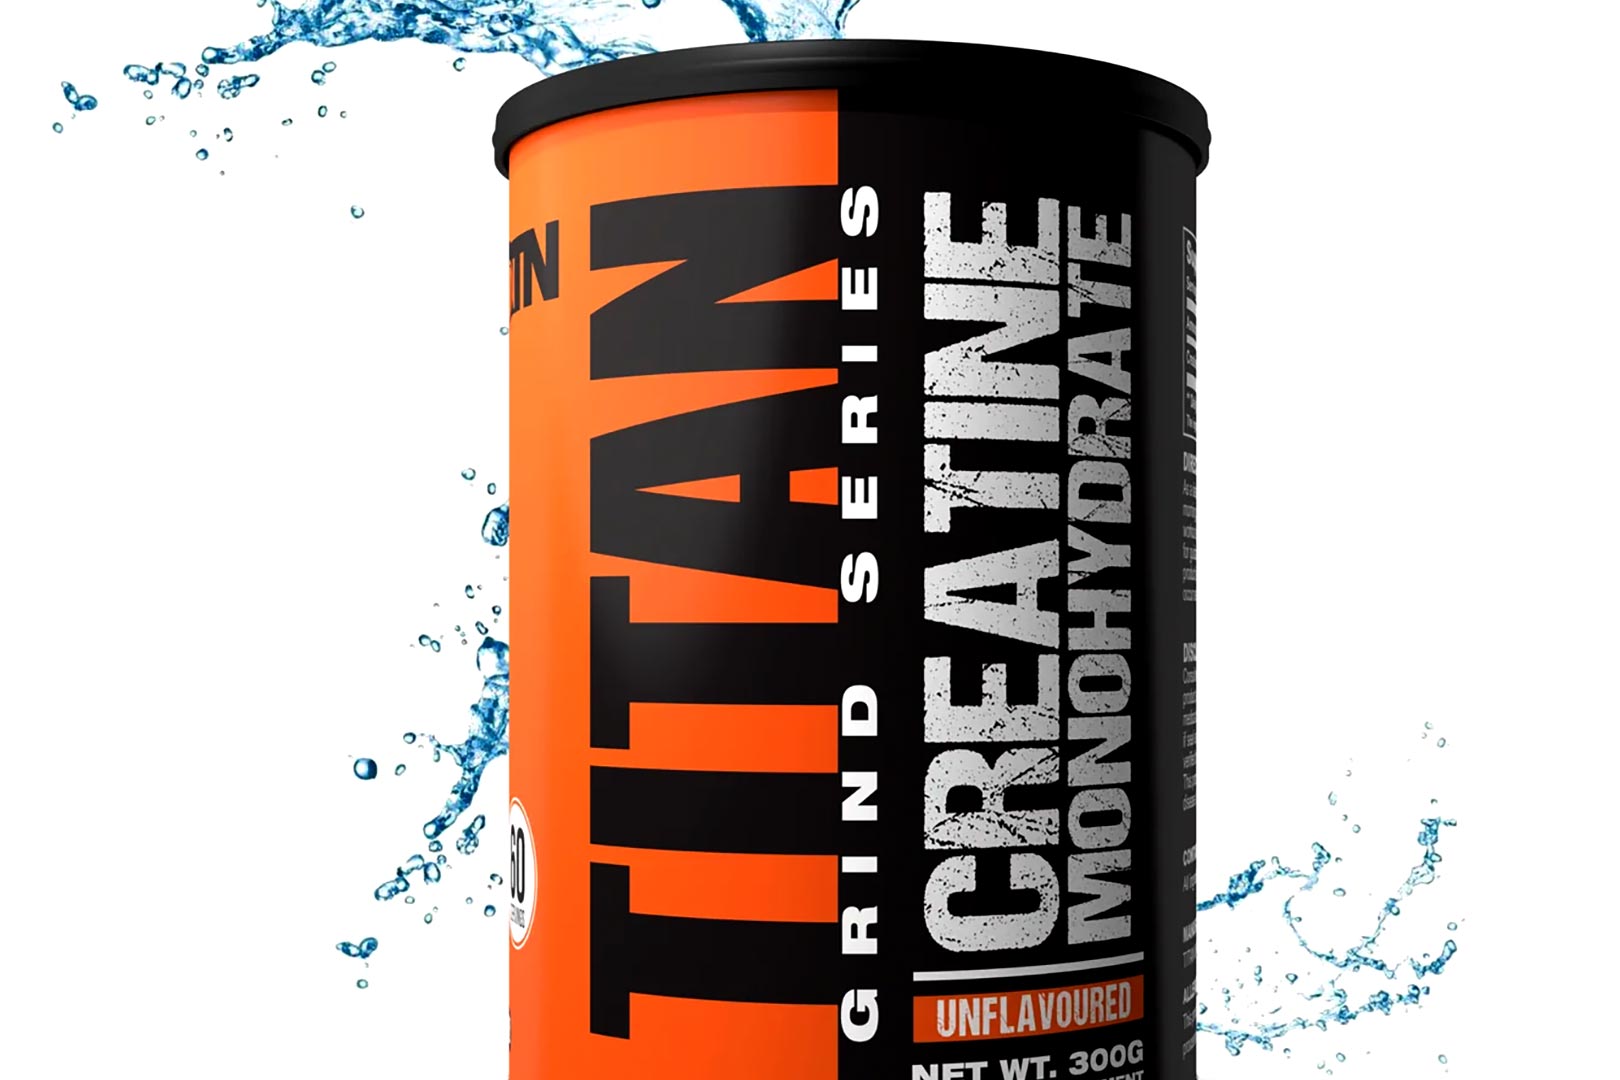 Titan Nutrition Creatine Monohydrate